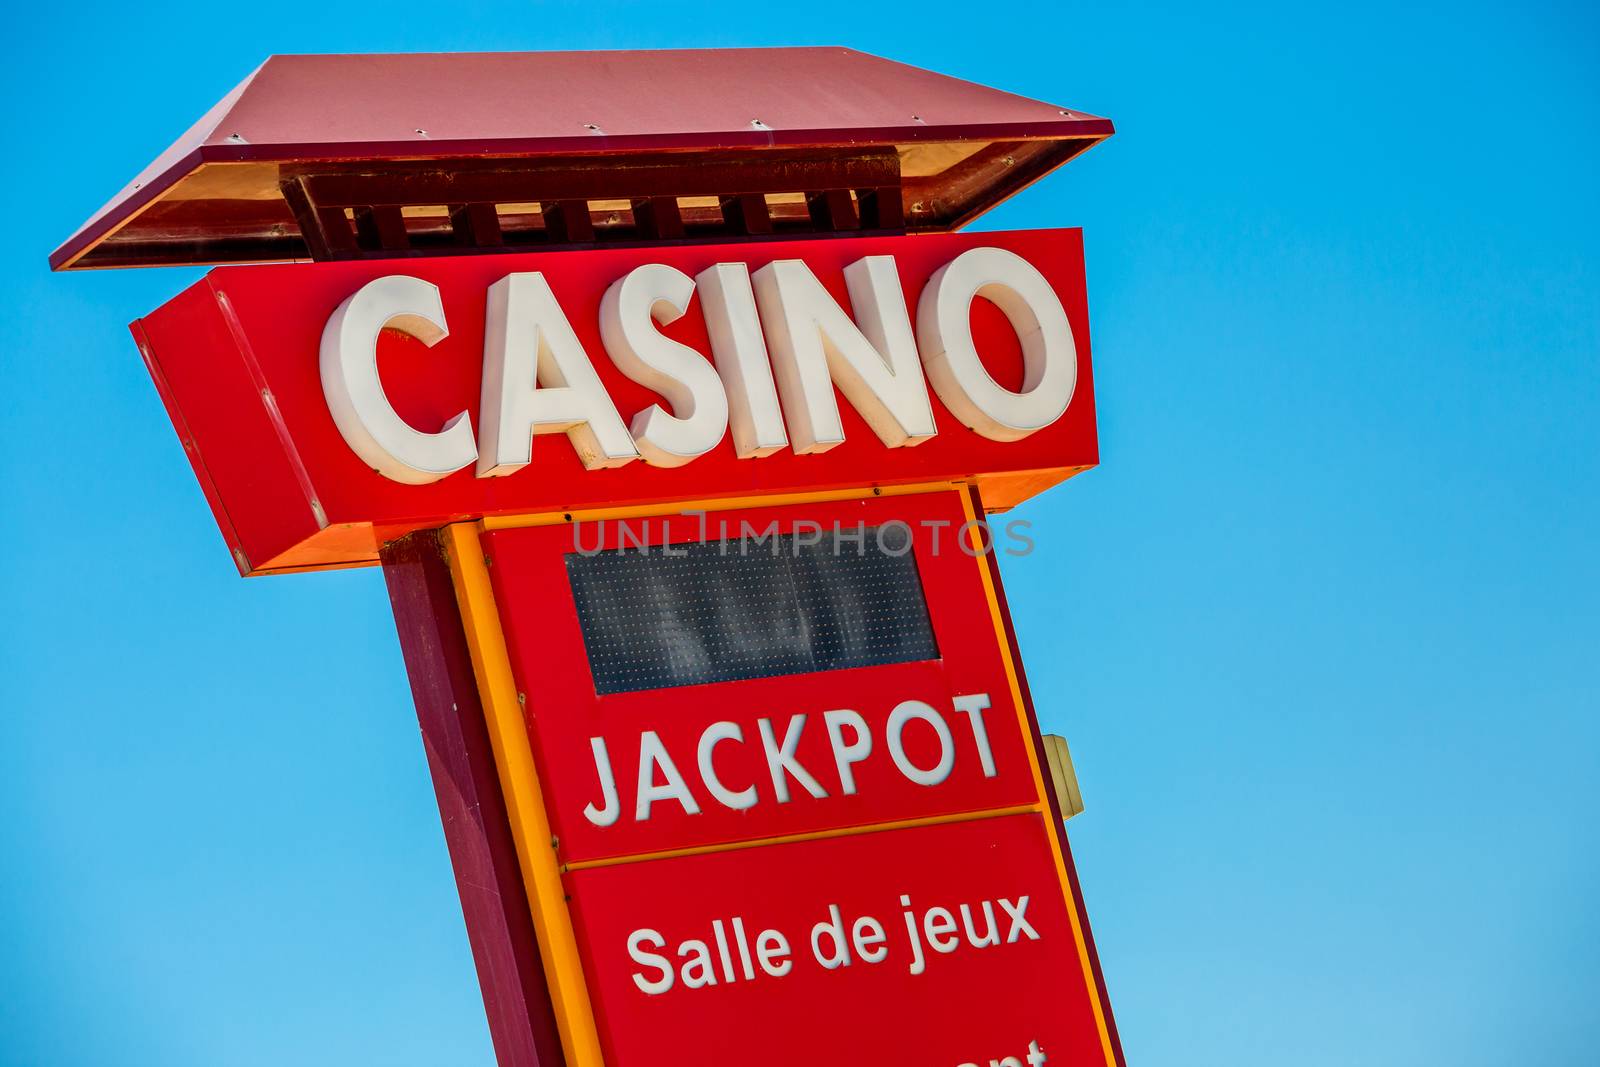 Casino sign on blue sky background